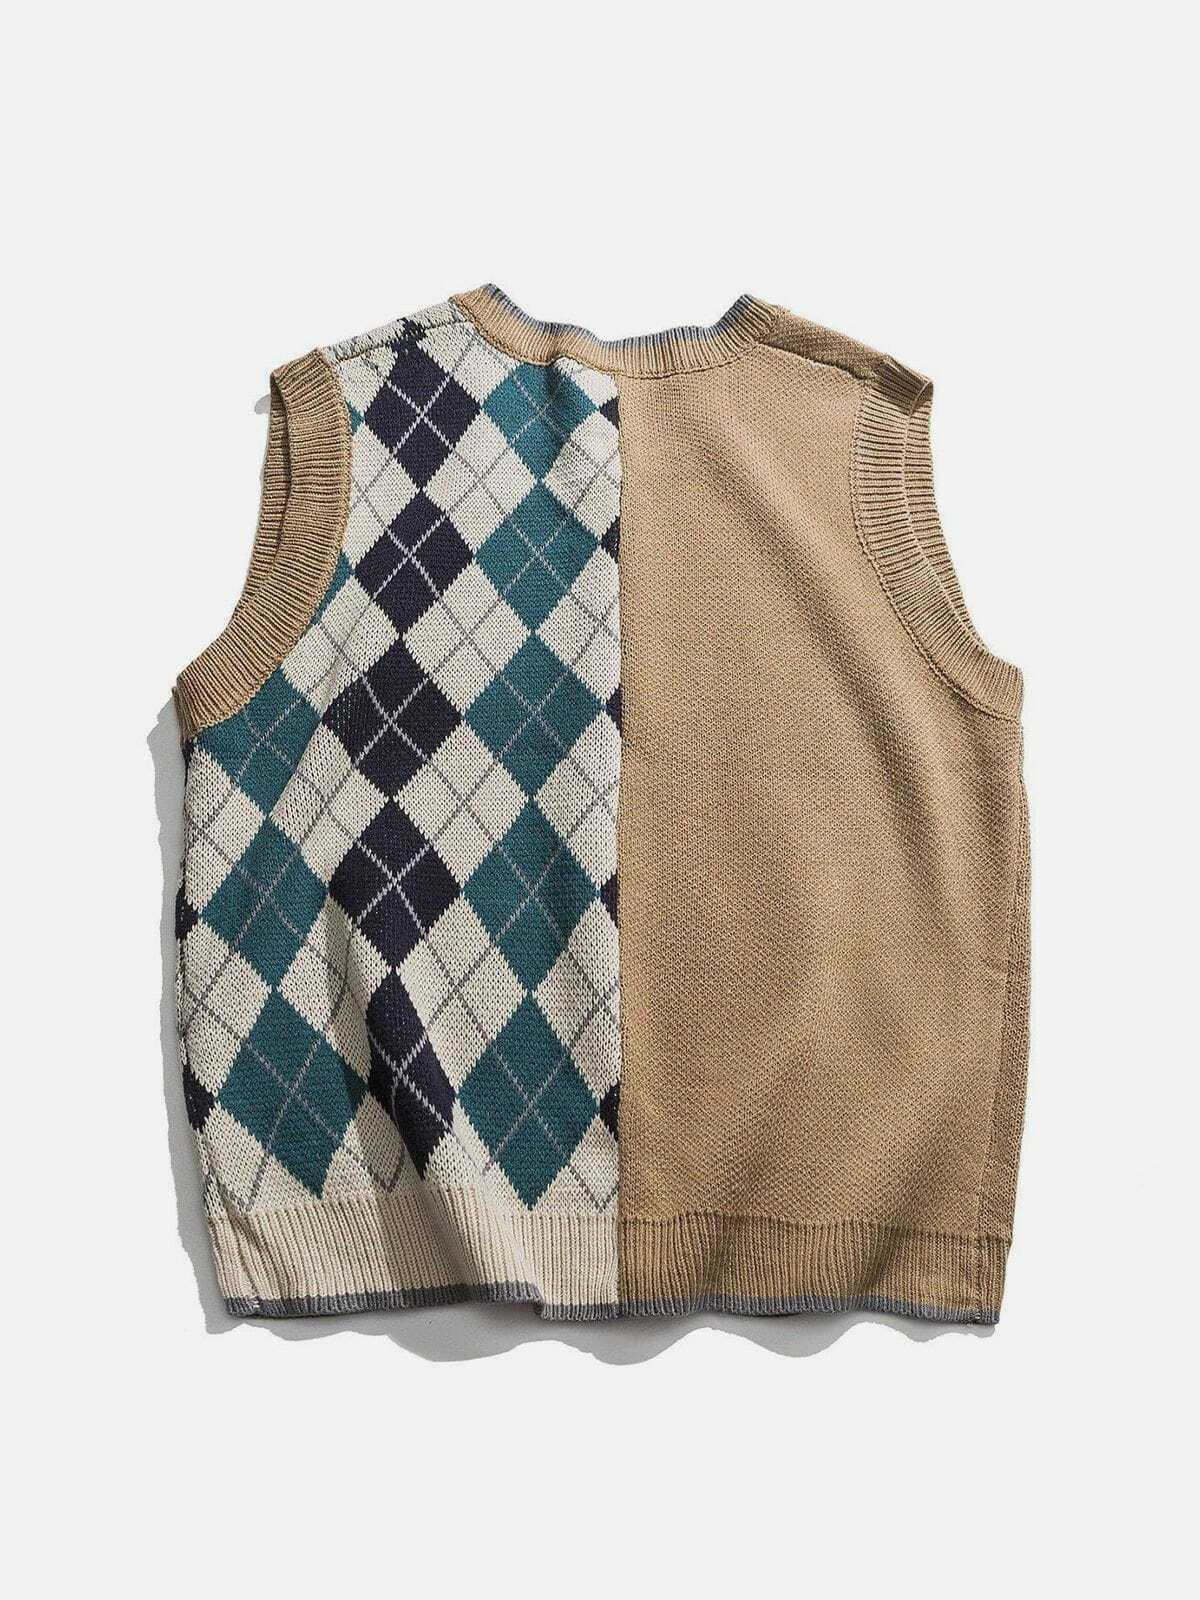 diamond stitch sweater vest edgy streetwear essential 2992